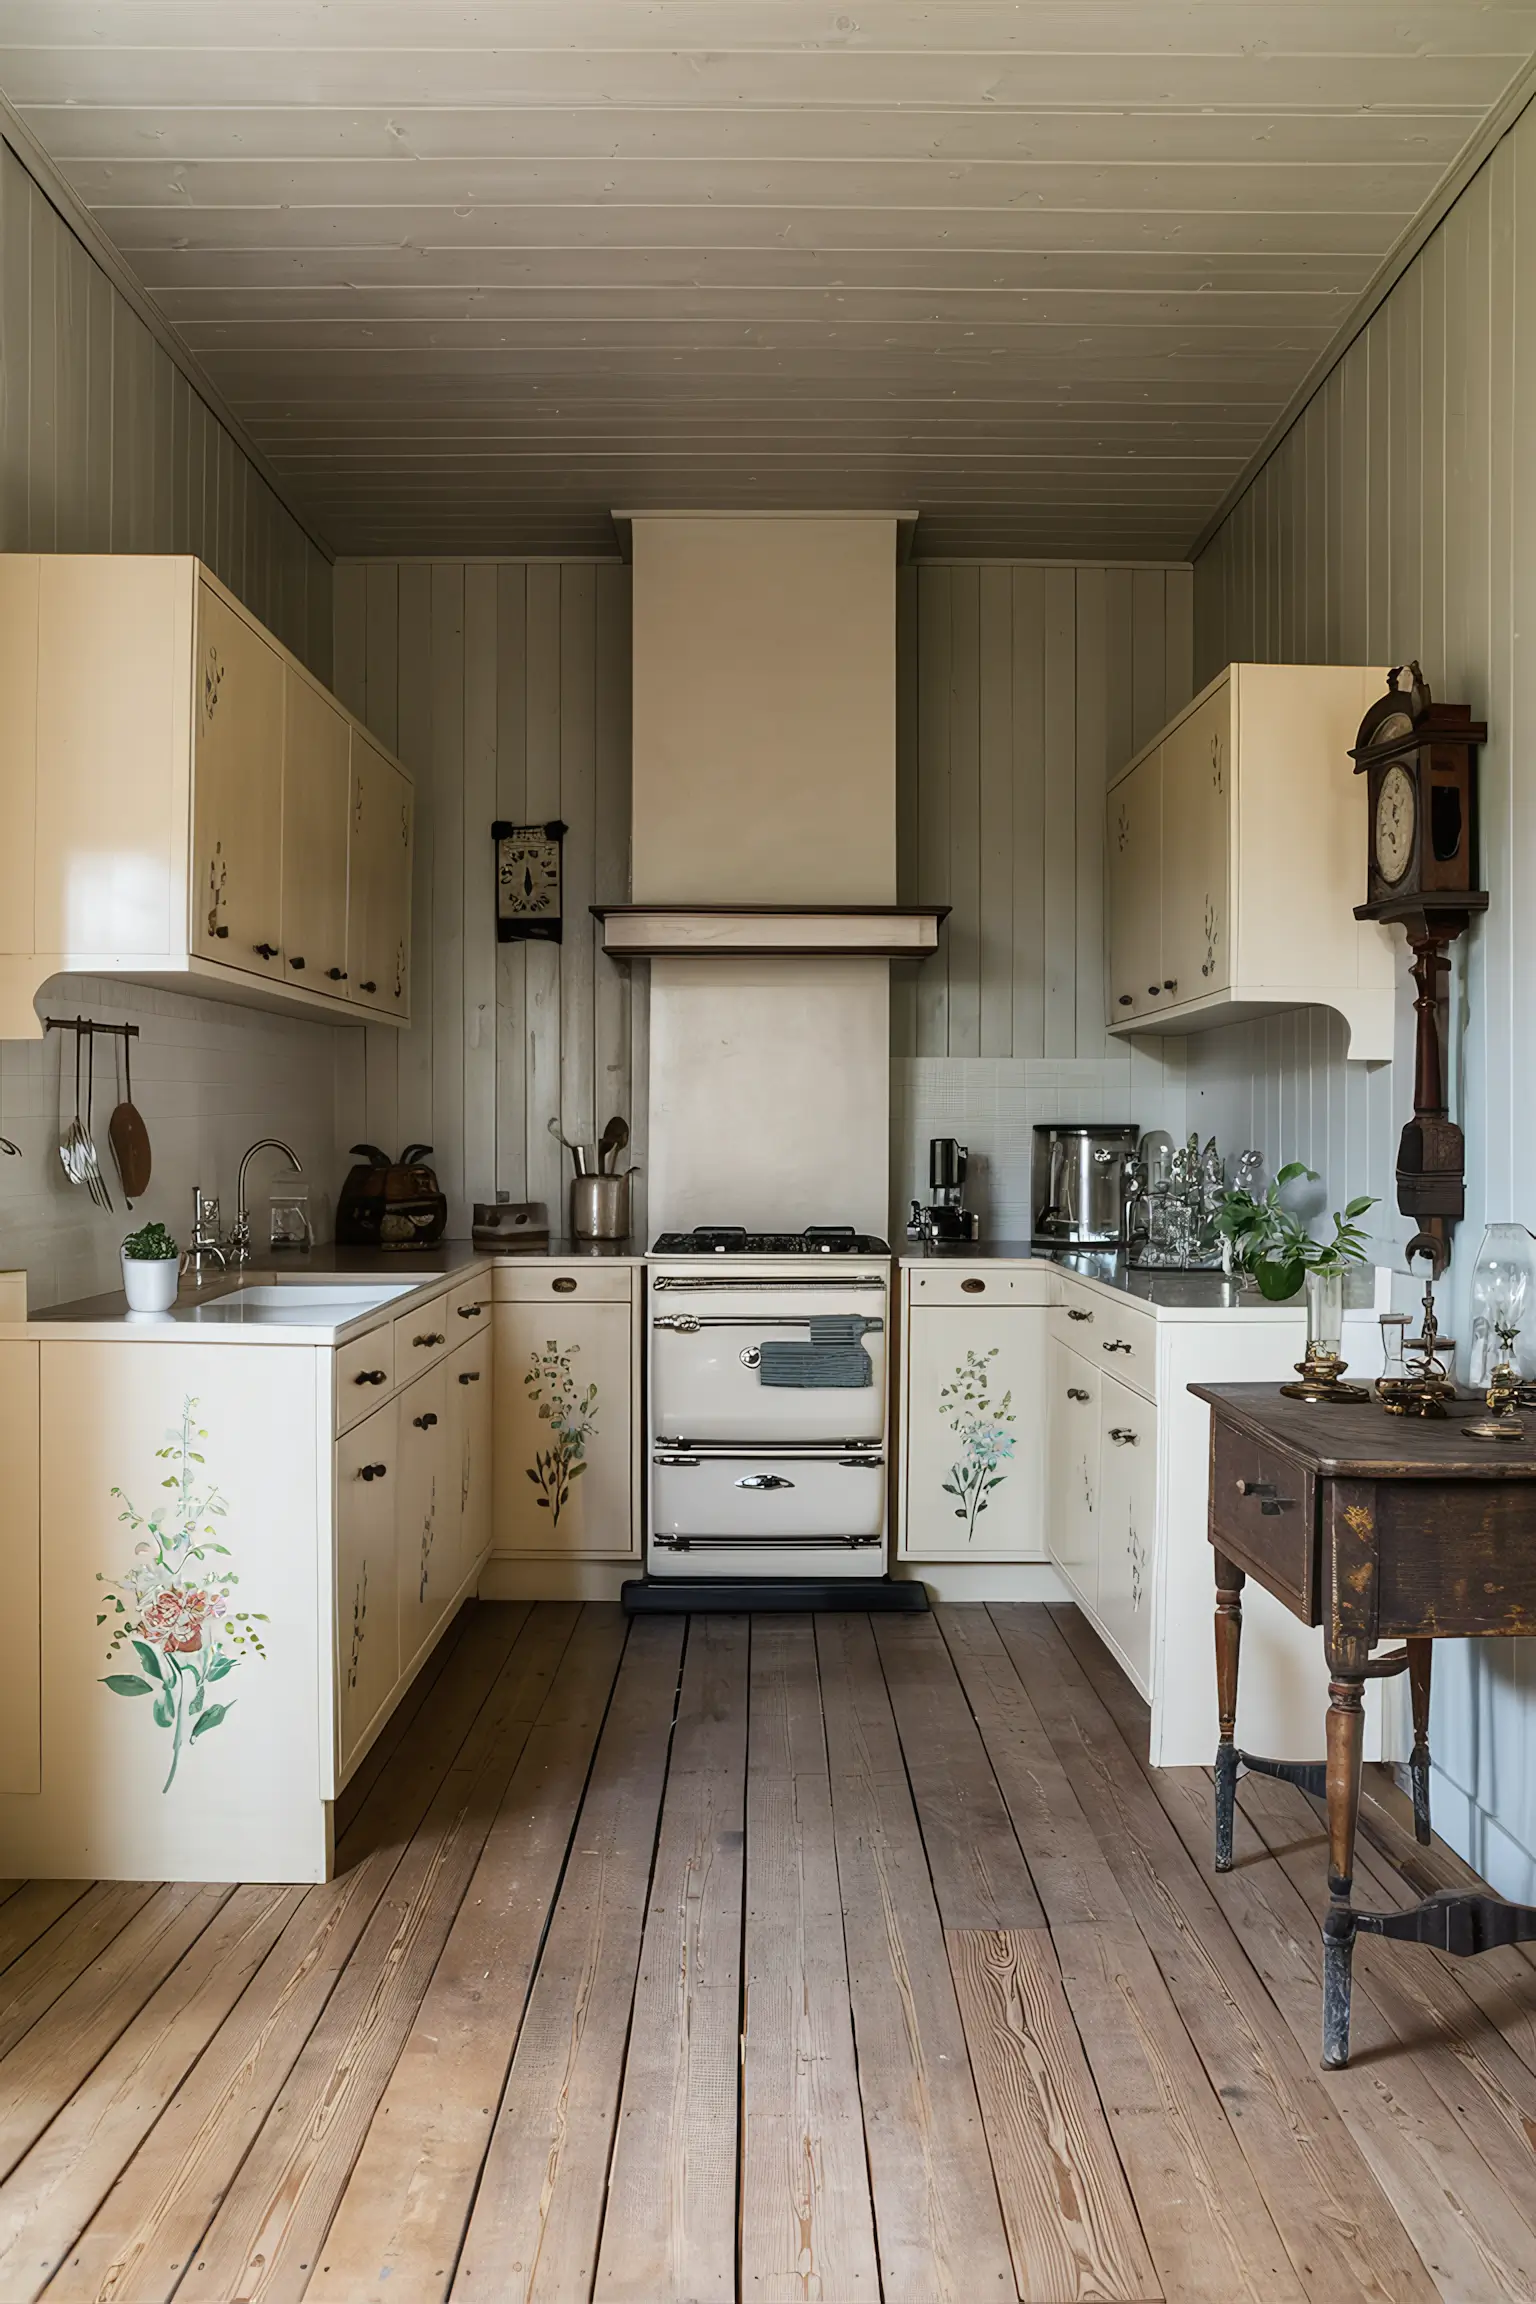 Minimalistic 1920s farmhouse kitchen with vintage appliances and antique decor.